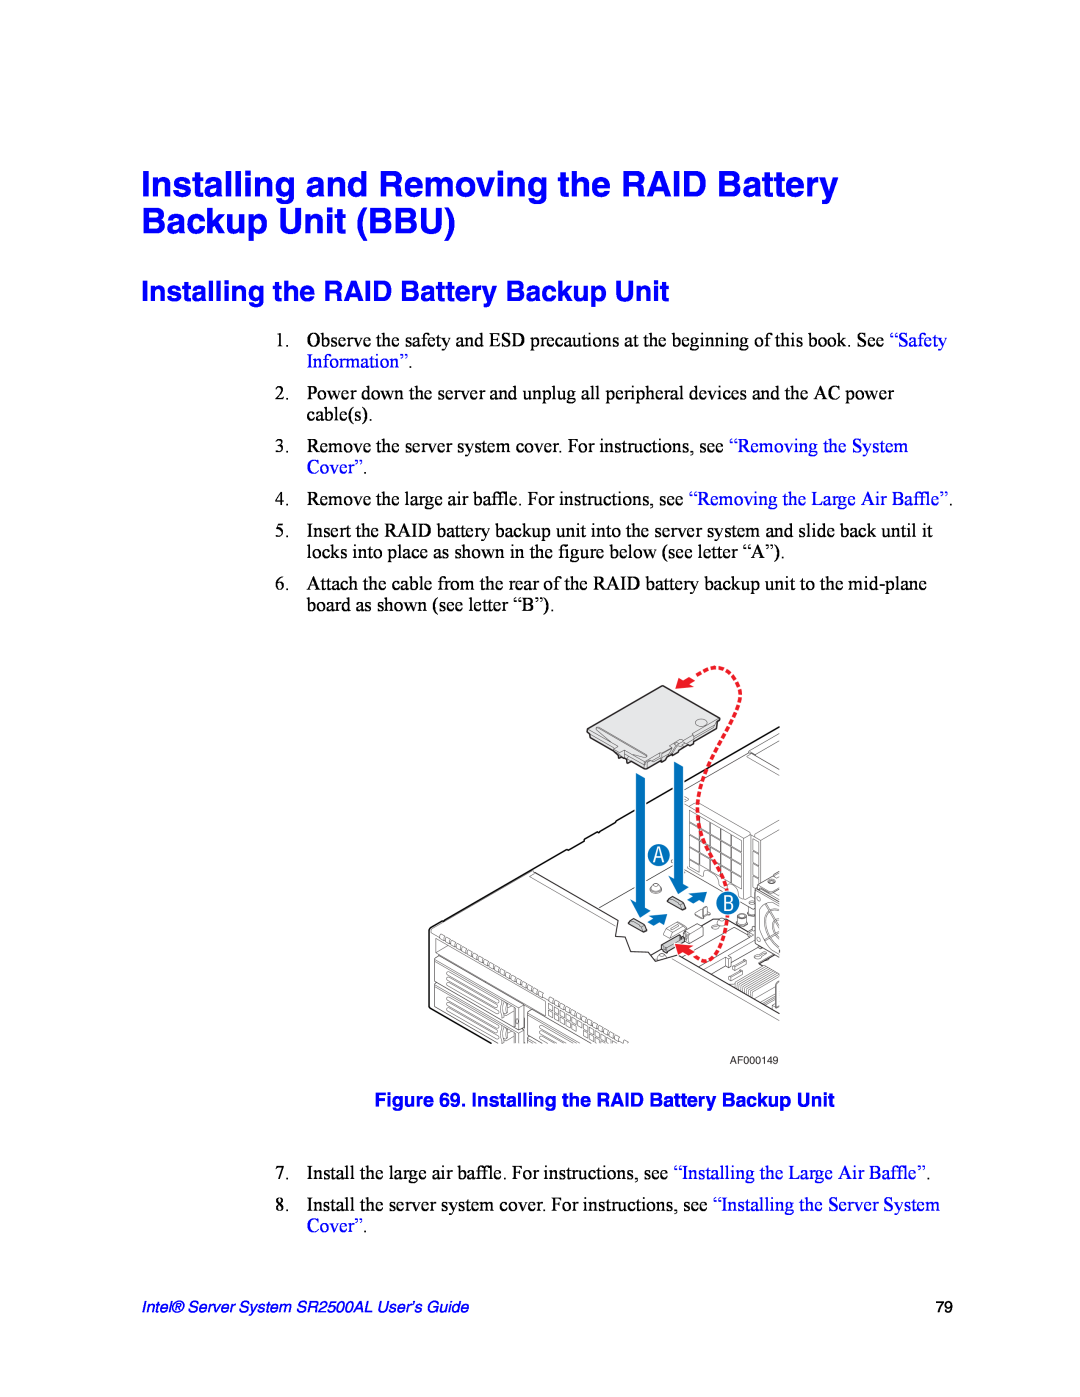 Intel SR2500AL manual Installing and Removing the RAID Battery Backup Unit BBU, Installing the RAID Battery Backup Unit 